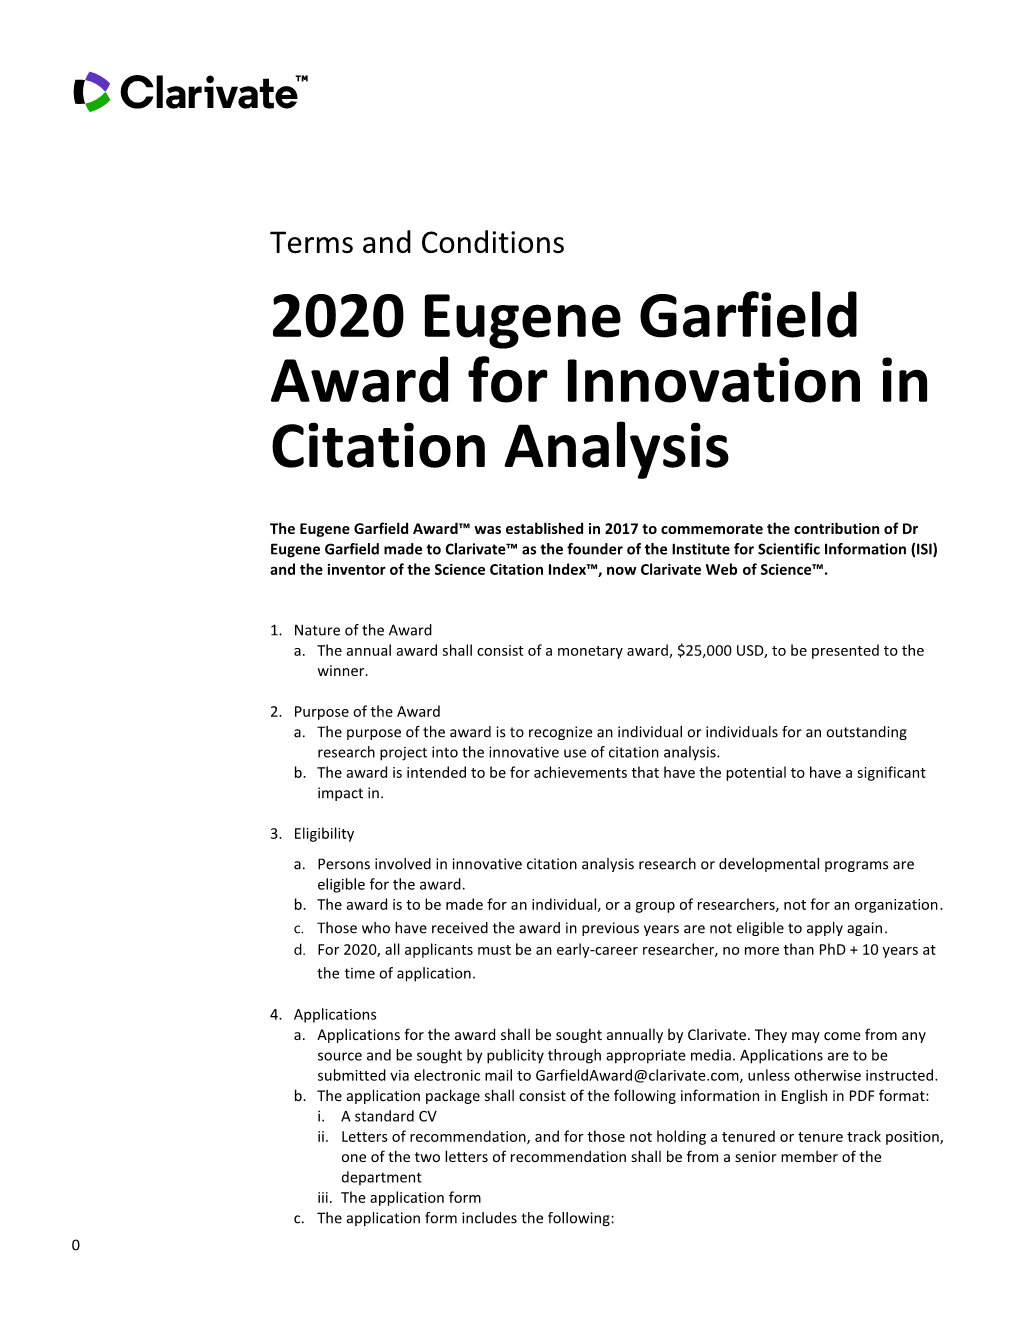 2020 Eugene Garfield Award for Innovation in Citation Analysis